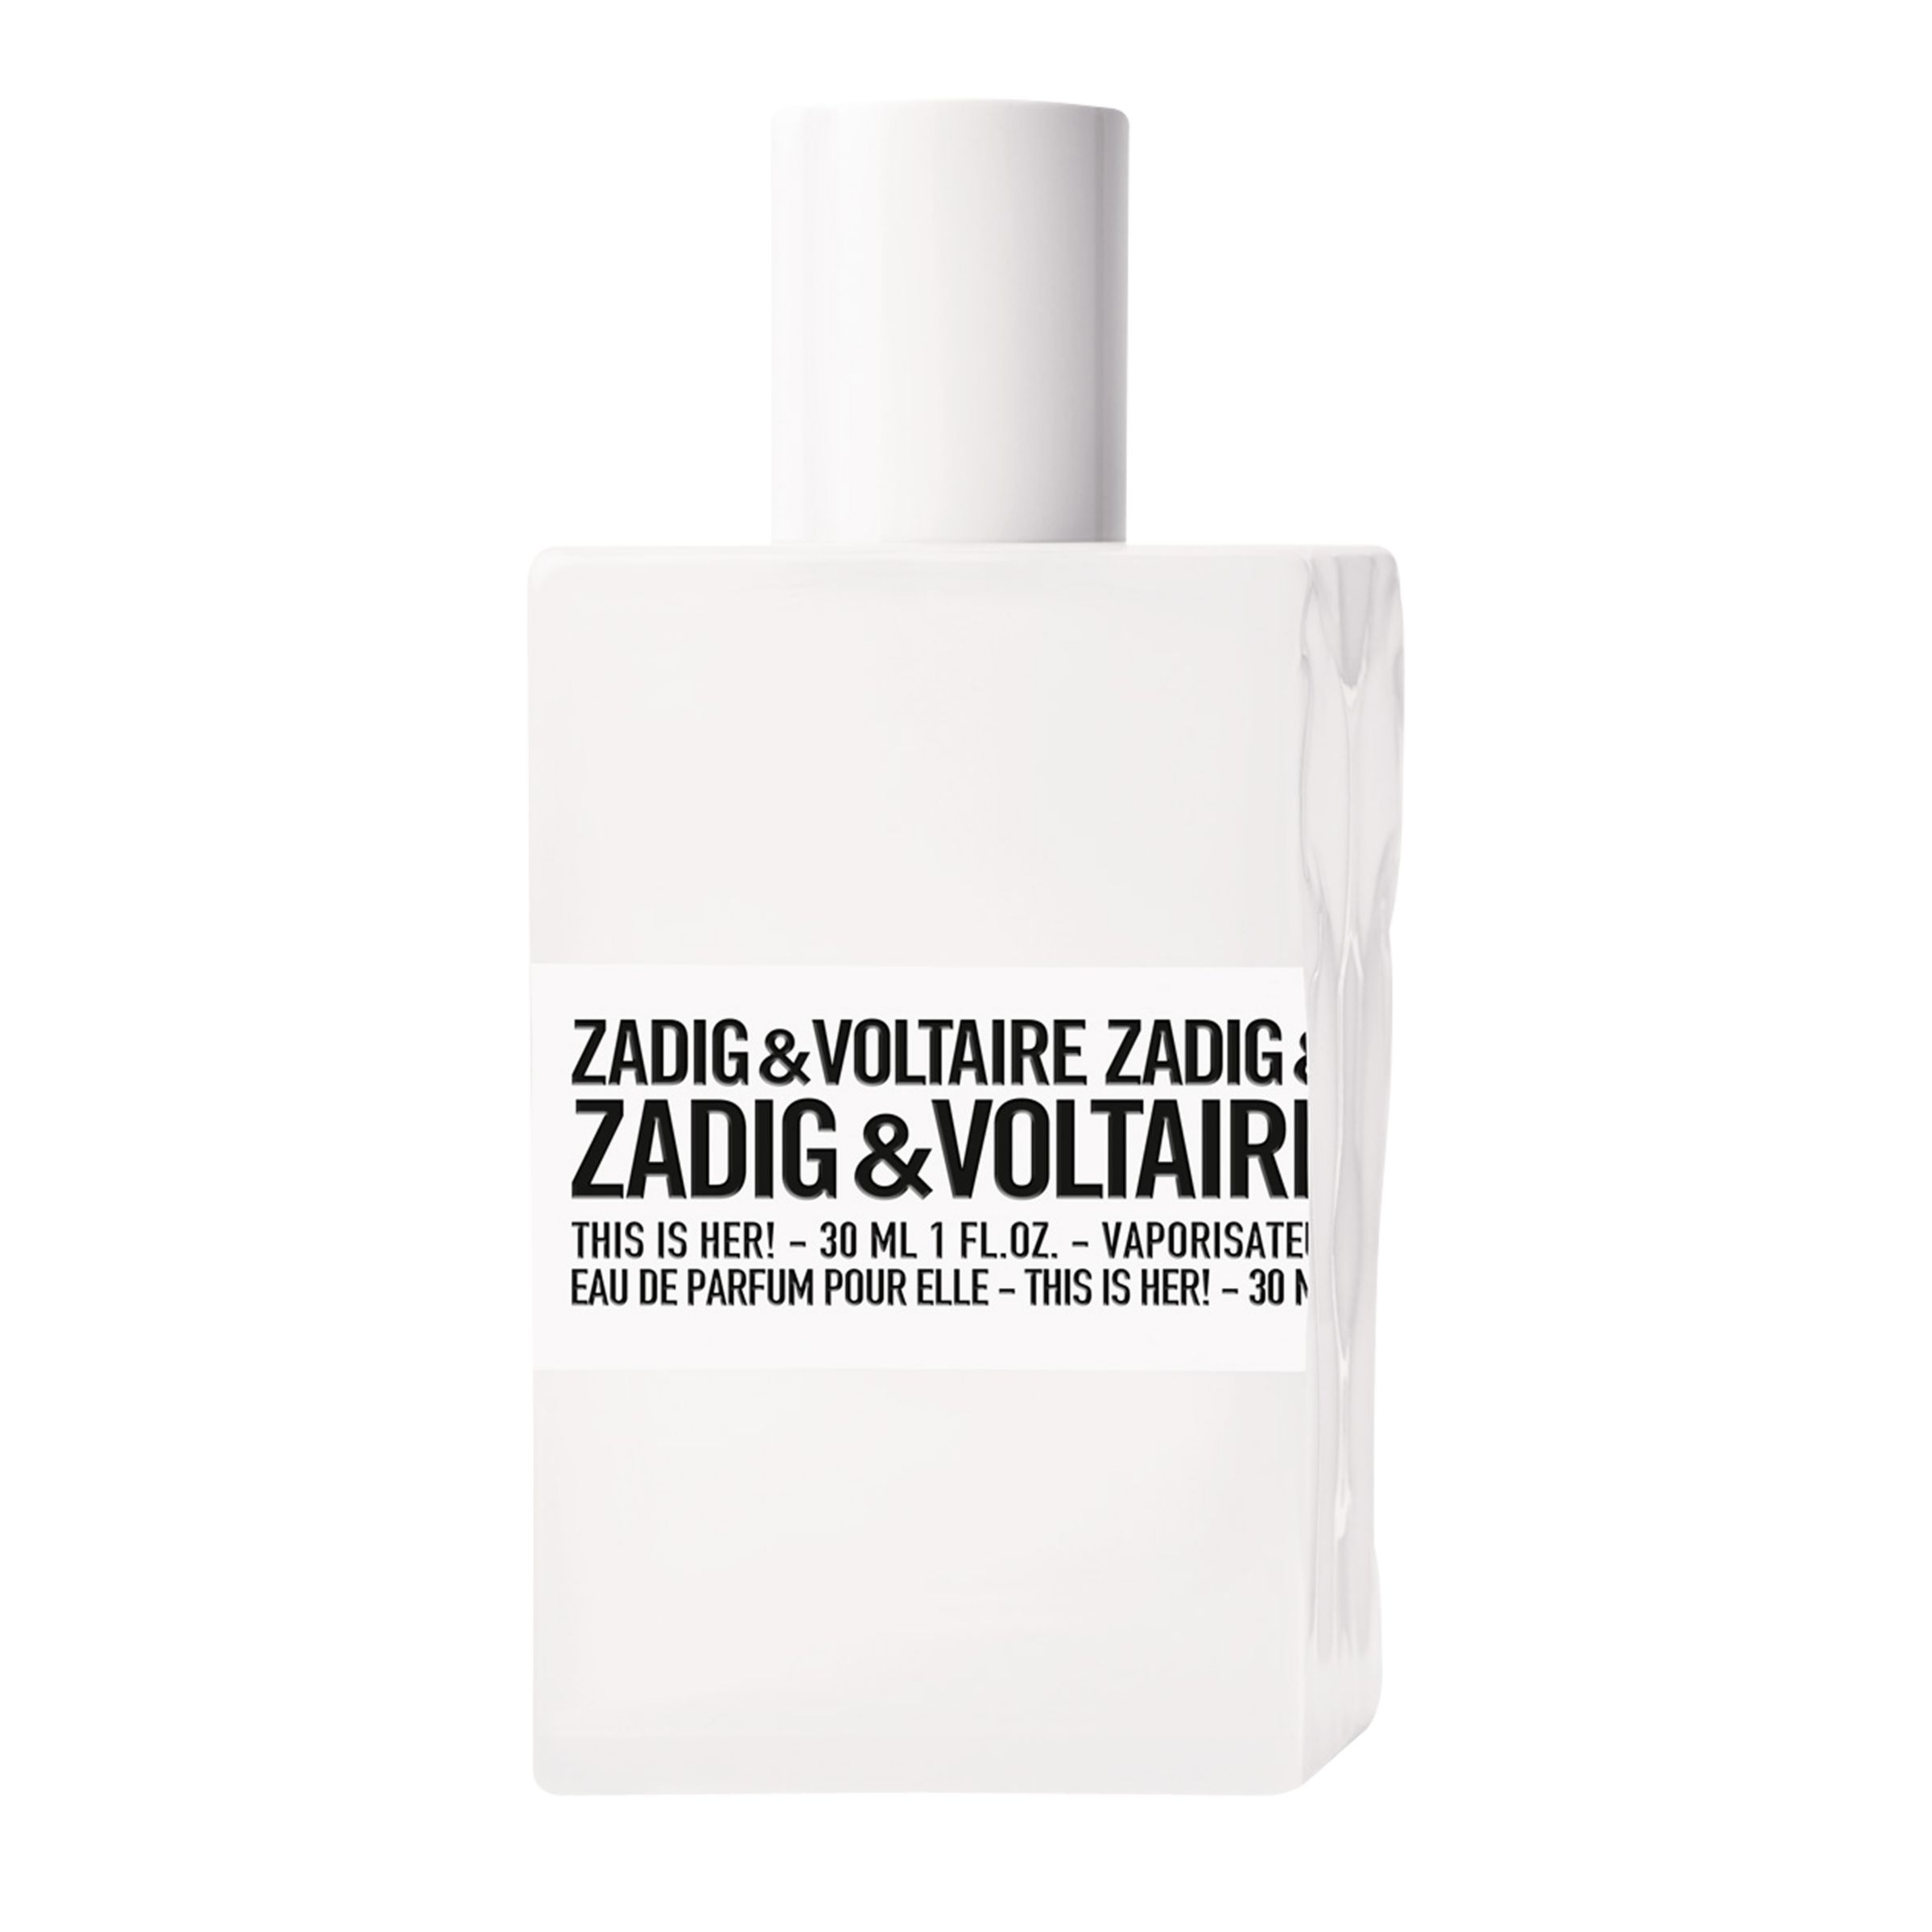 Zadig & Voltaire This Is Her! Eau de Parfum at John Lewis & Partners